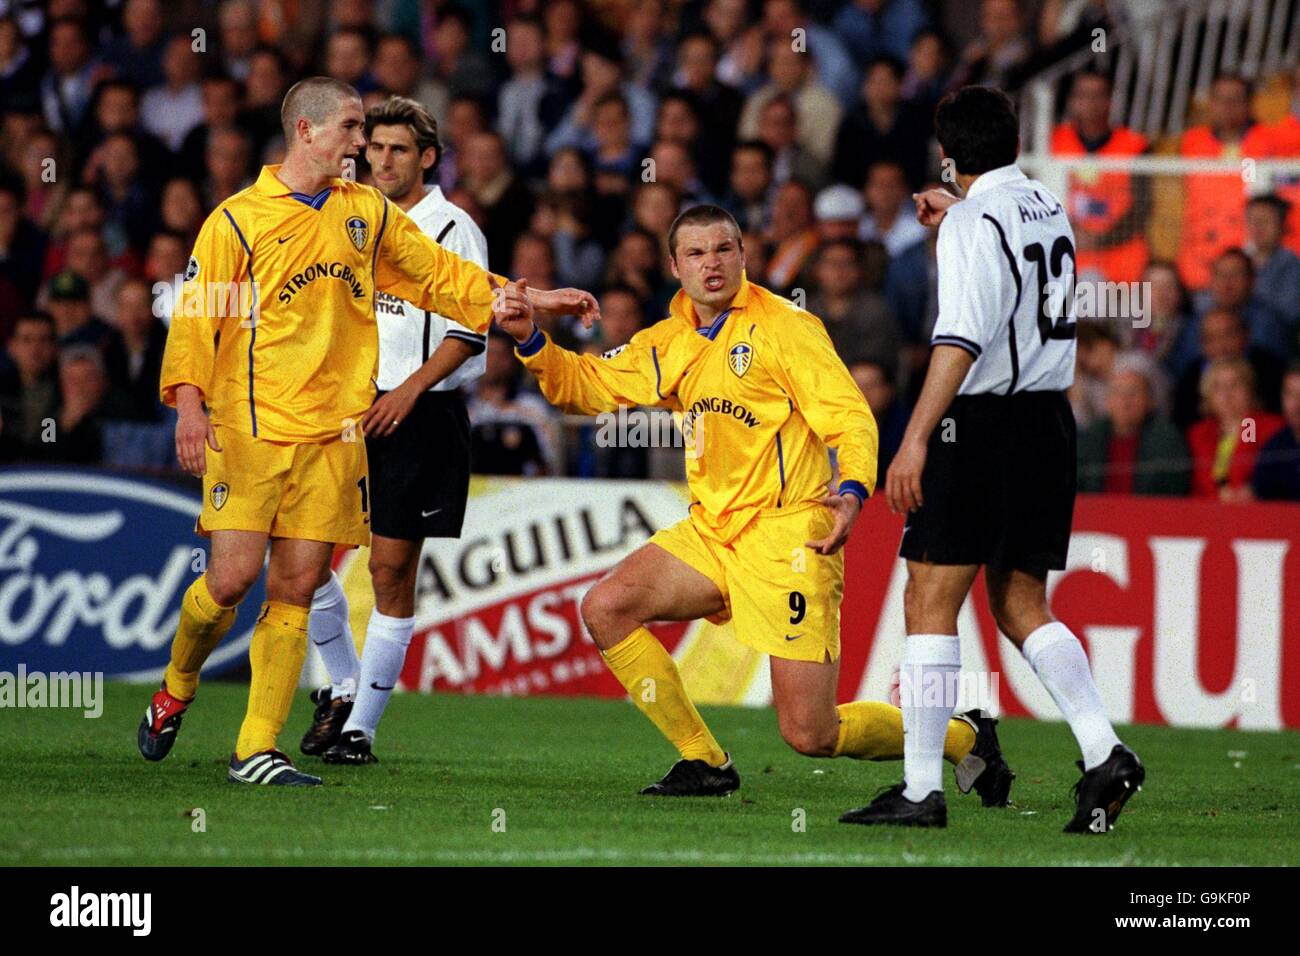 Soccer - UEFA Champions League - Semi Final Second Leg - Valencia v Leeds  United. Leeds United's Mark Viduka (c) looks angrily towards Valencia's  Roberto Ayala (r) as Harry Kewell (l) tries